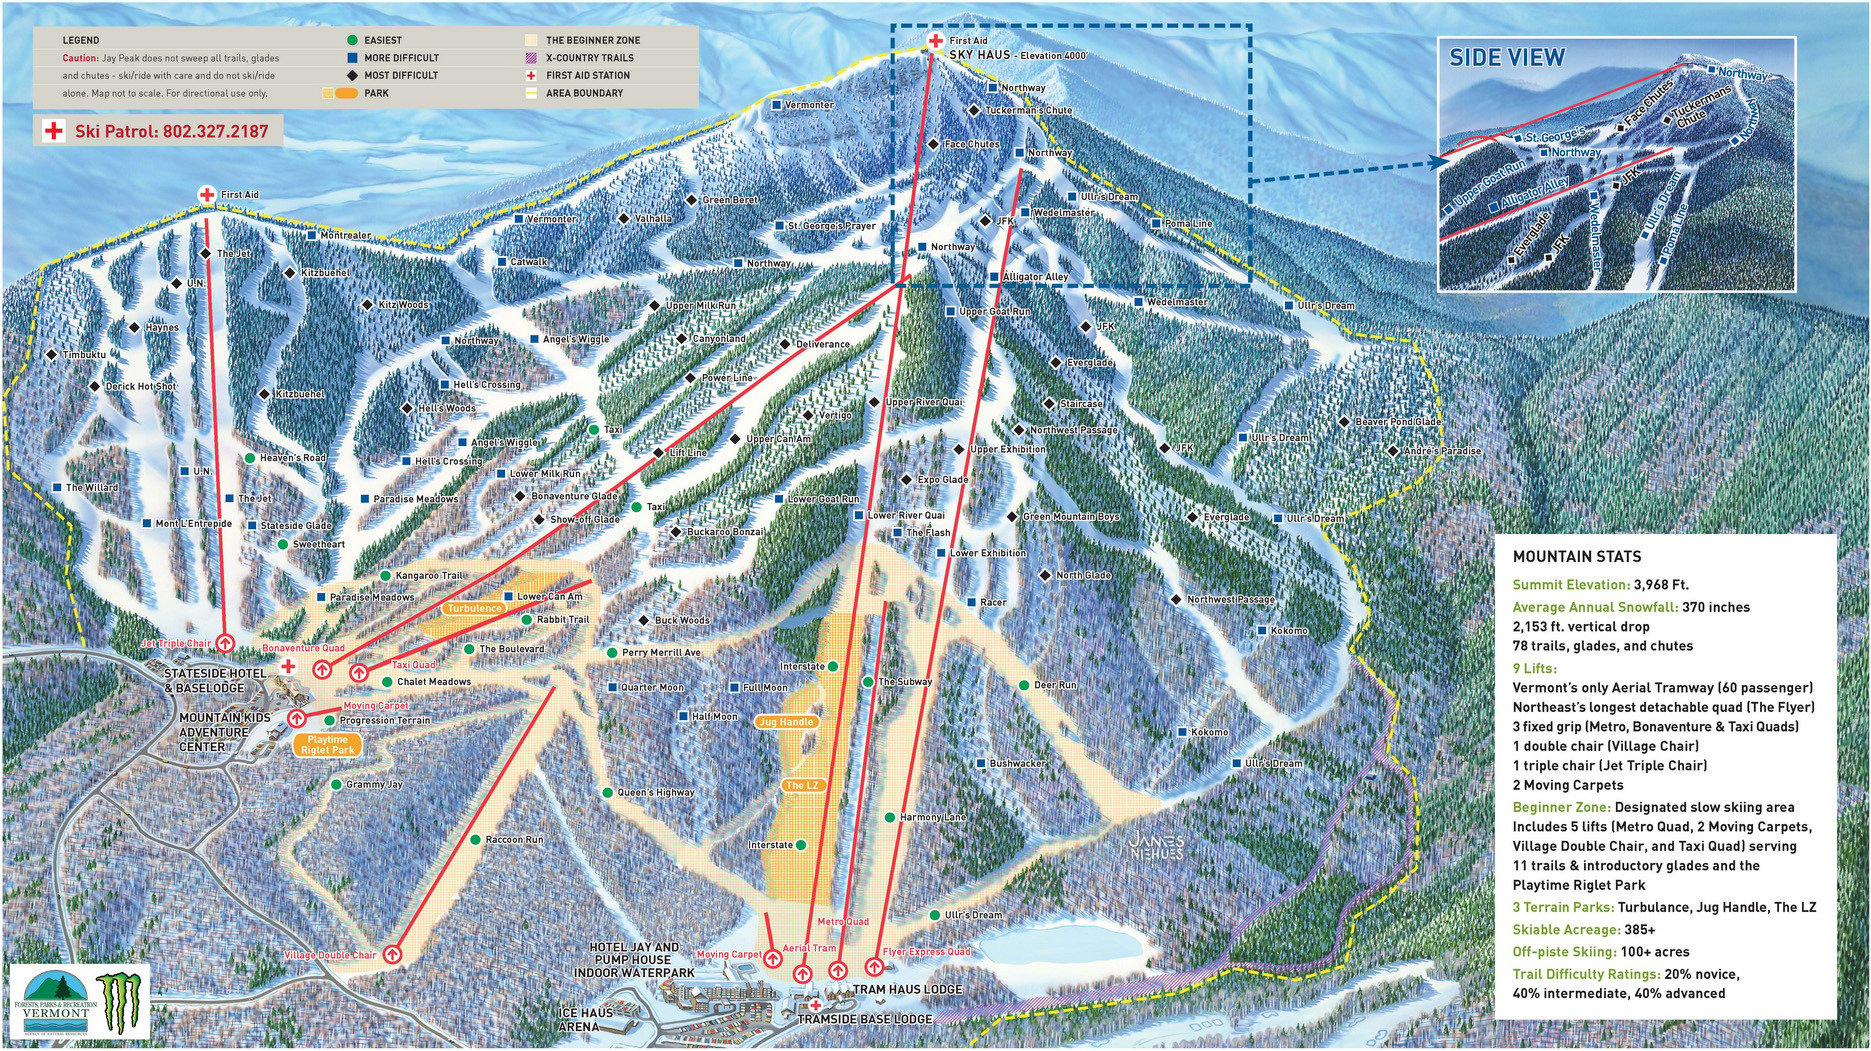 Jay Peak Trail Map